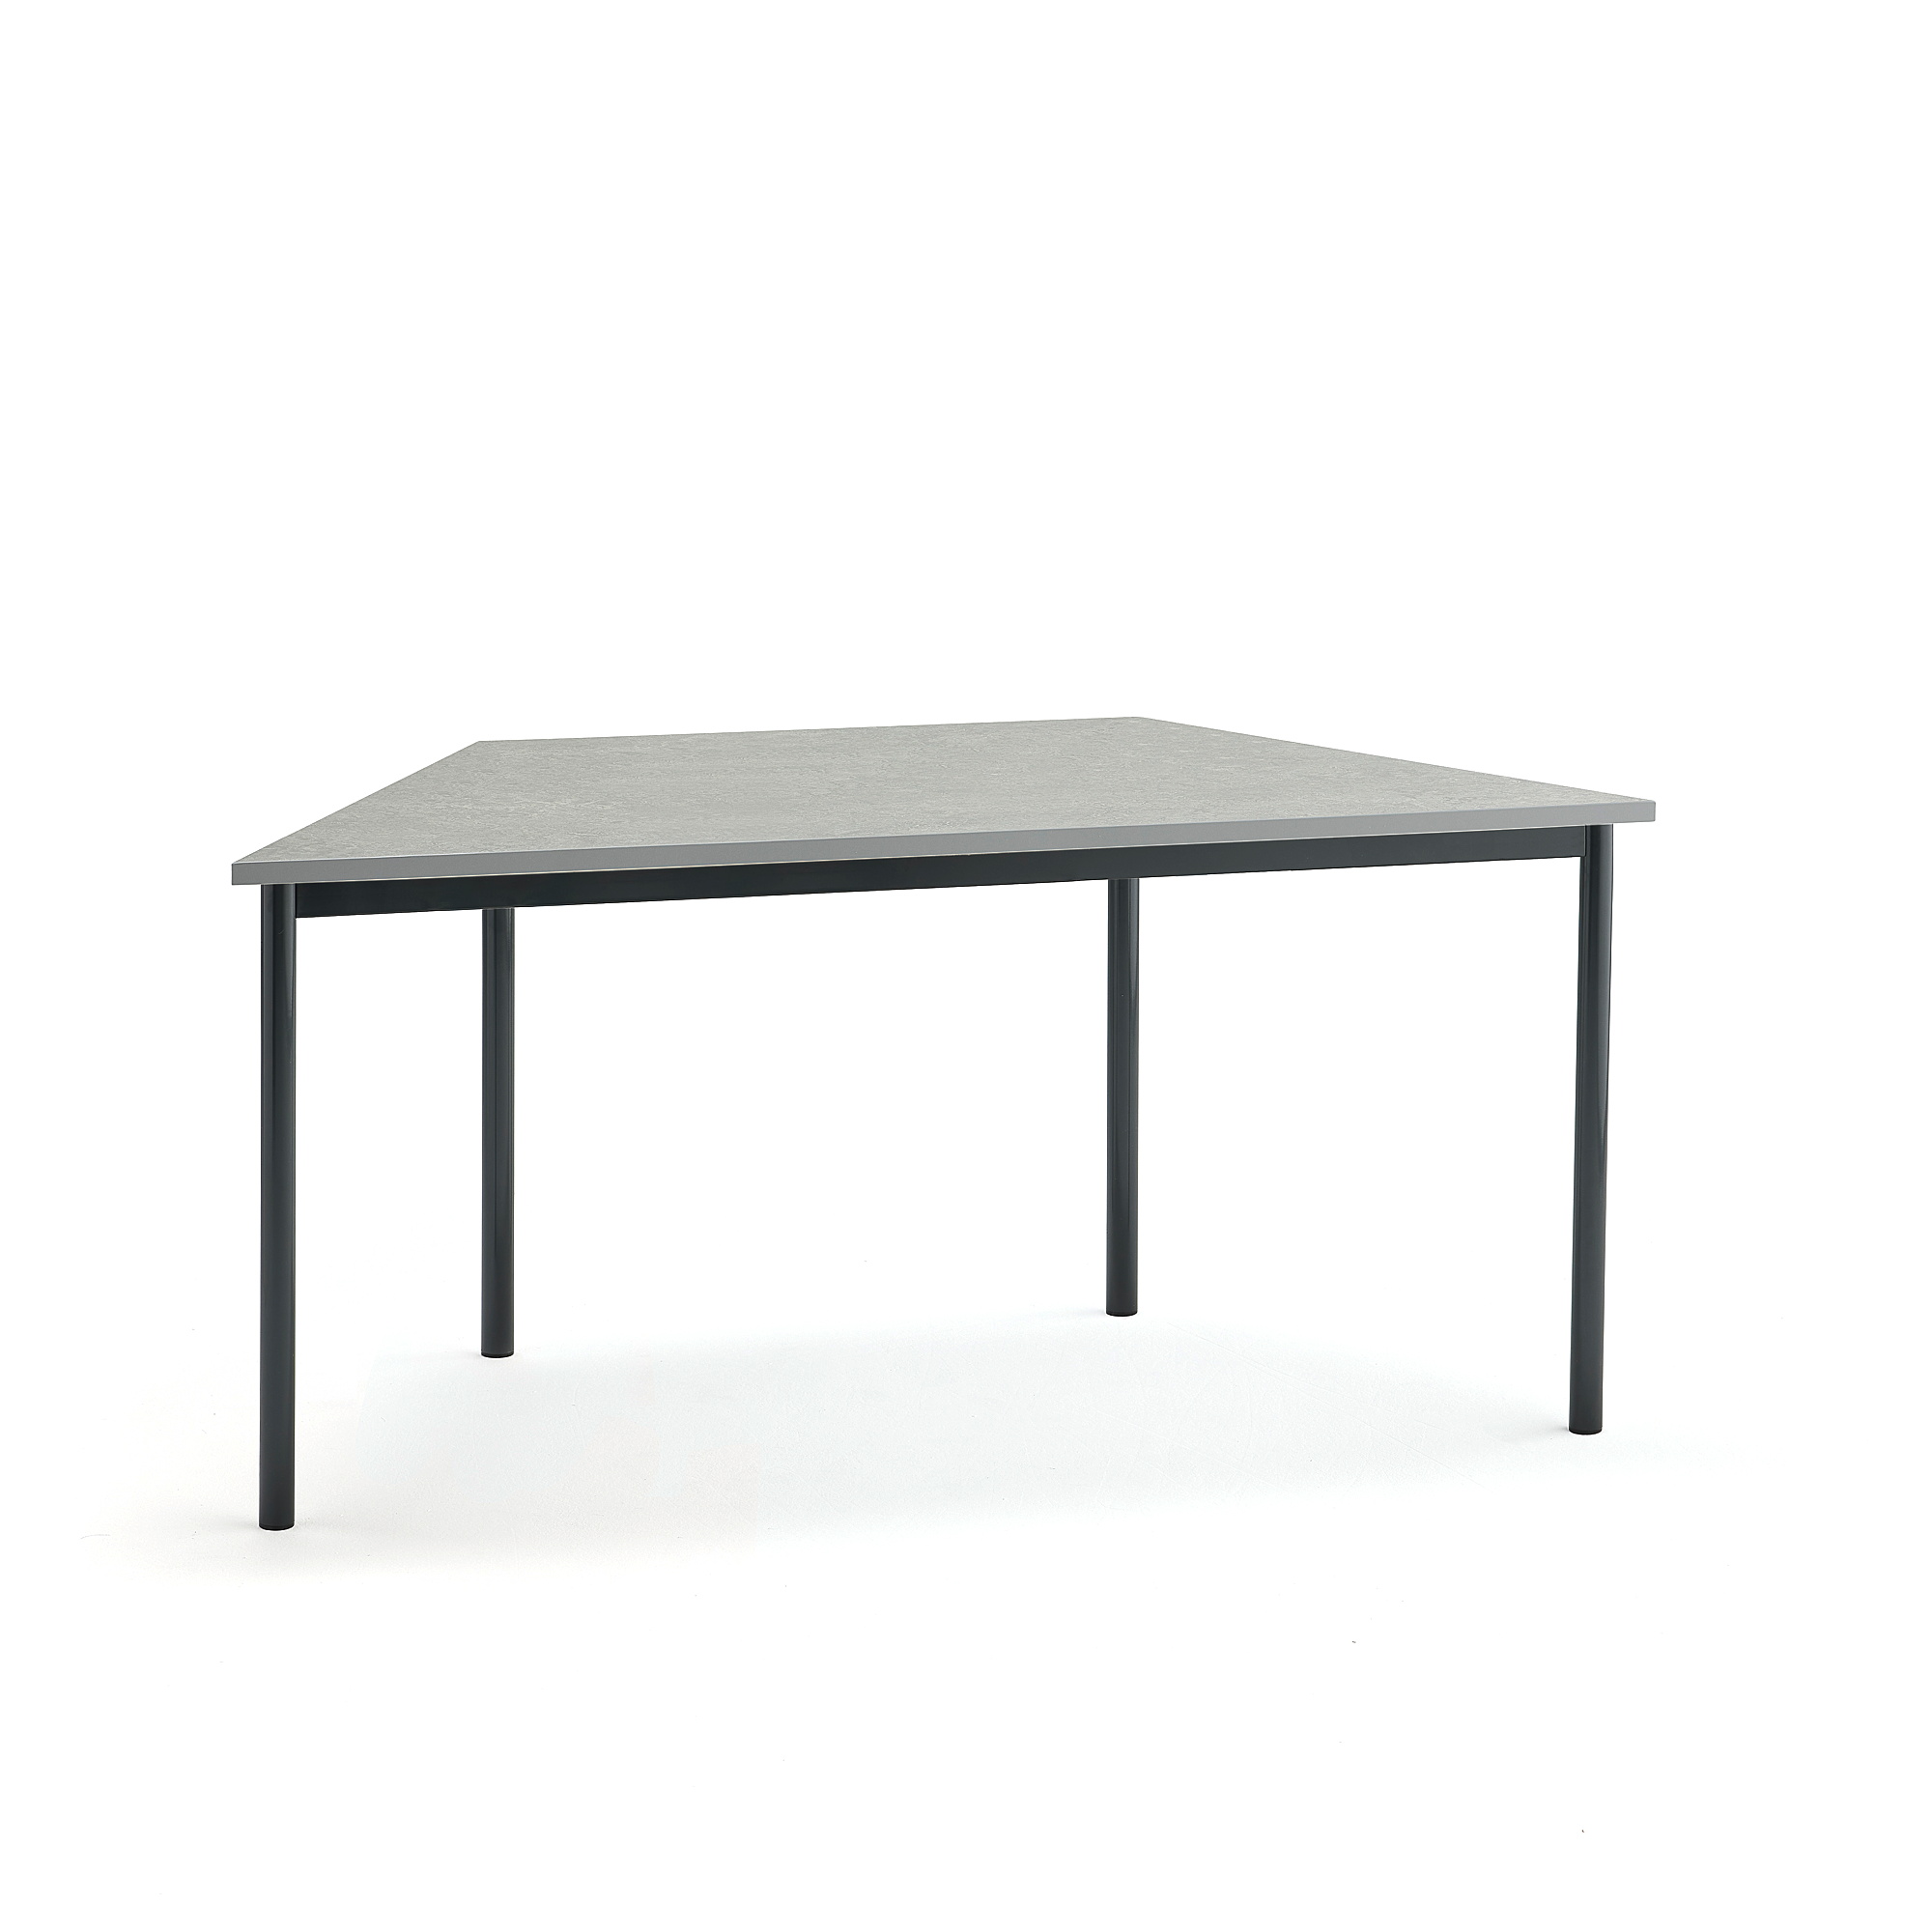 Stůl SONITUS TRAPETS, 1600x800x720 mm, antracitově šedé nohy, deska s linoleem, šedá